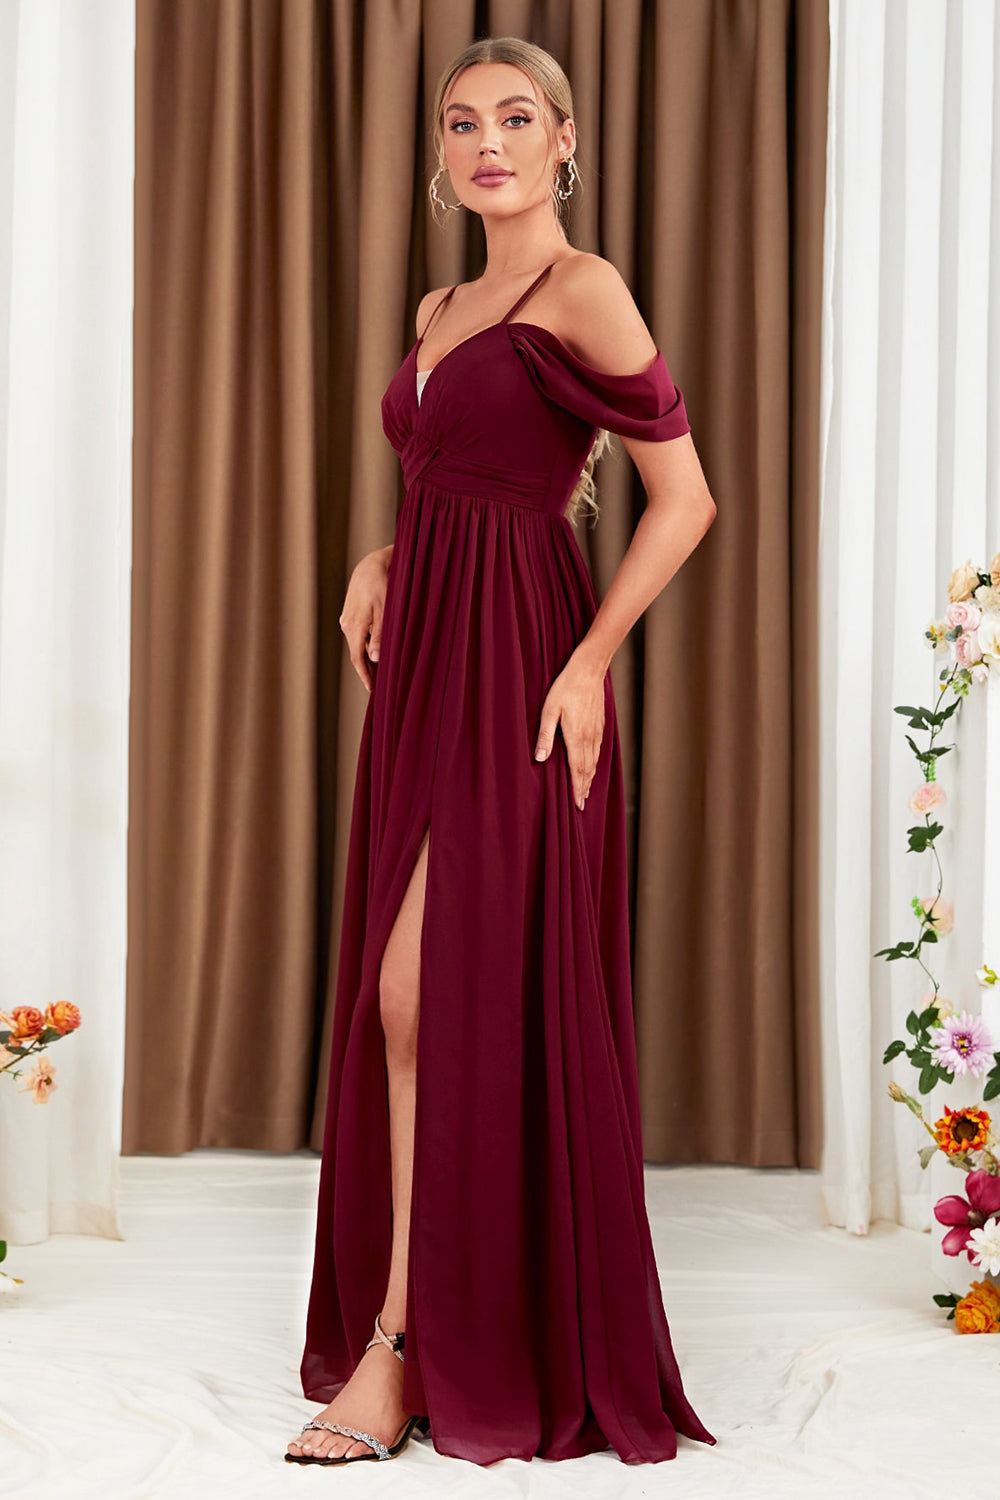 Maroon Formal Dresses, Magenta Prom Gowns | Dressafford